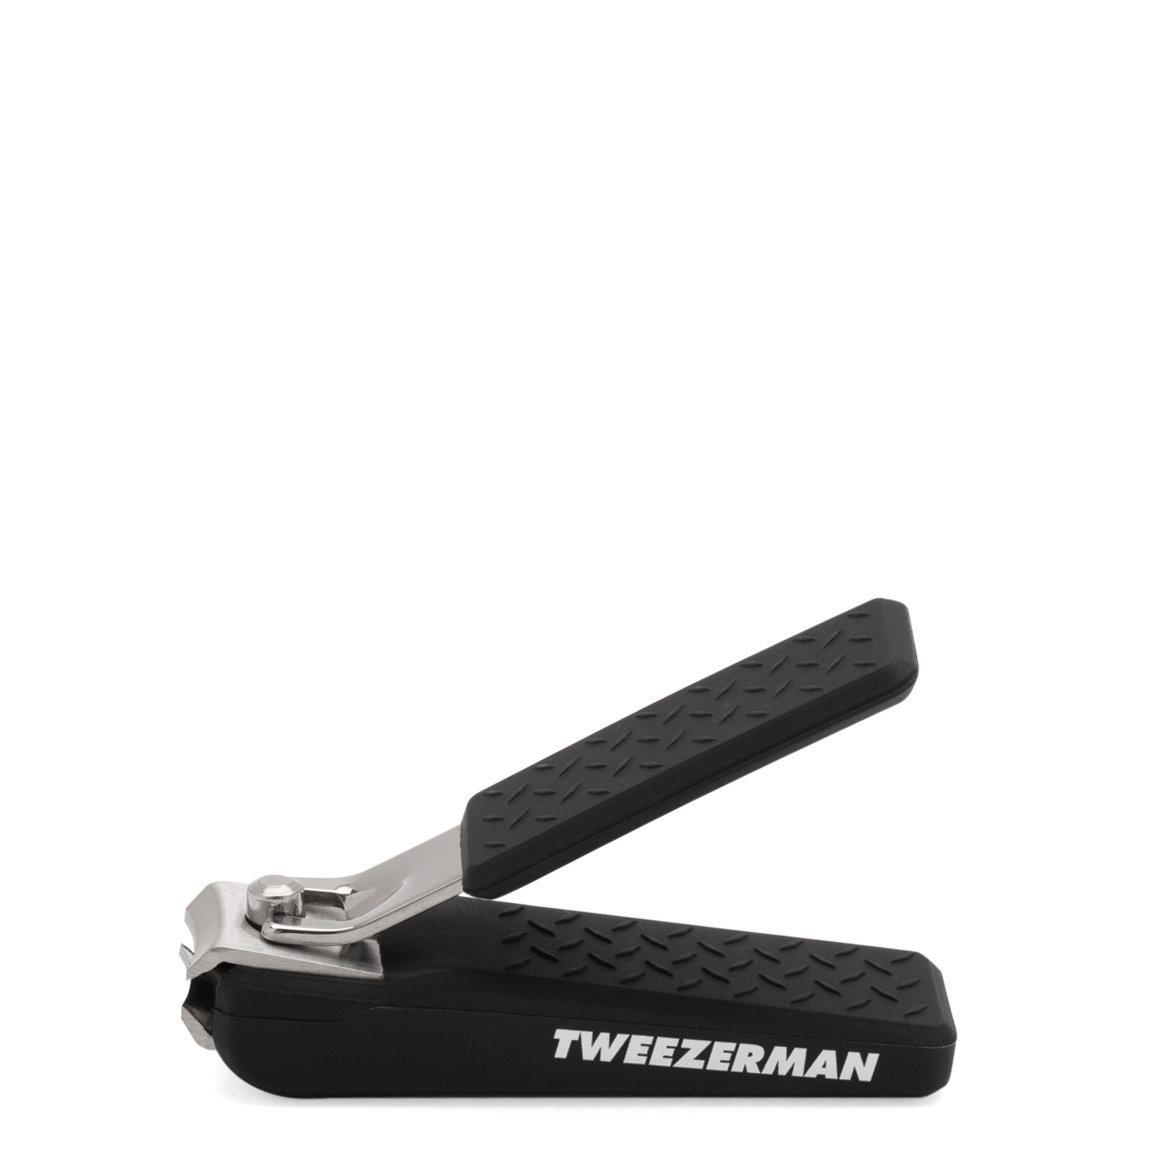 Tweezerman Precision Grip Fingernail Clipper alternative view 1.